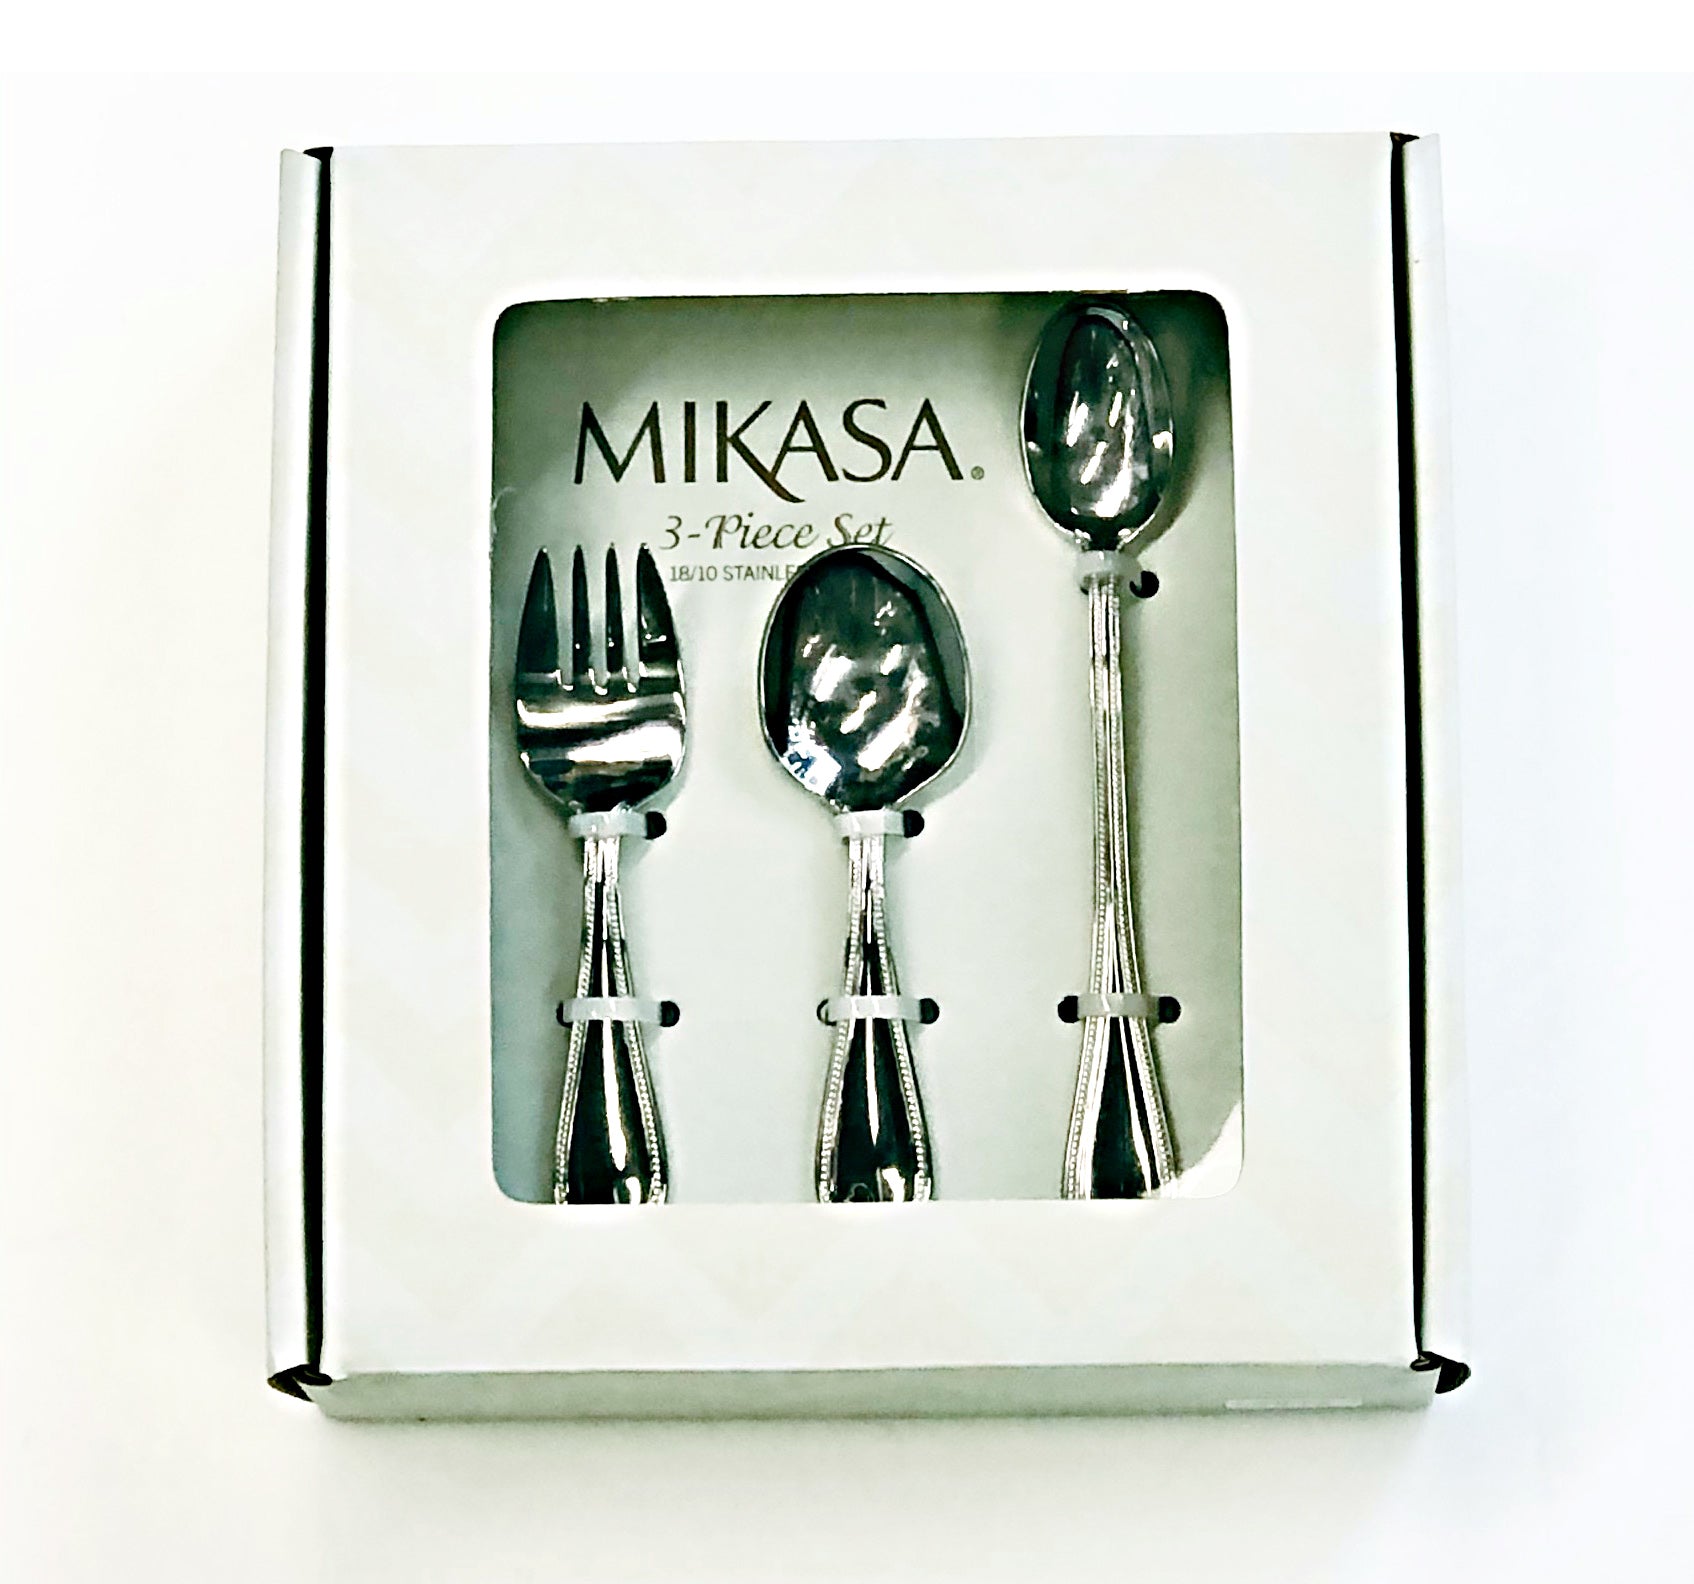 Mikasa Baby Feeding Spoon 3 piece Set 18/10 Stainless Steel Beaded - Royal Gift